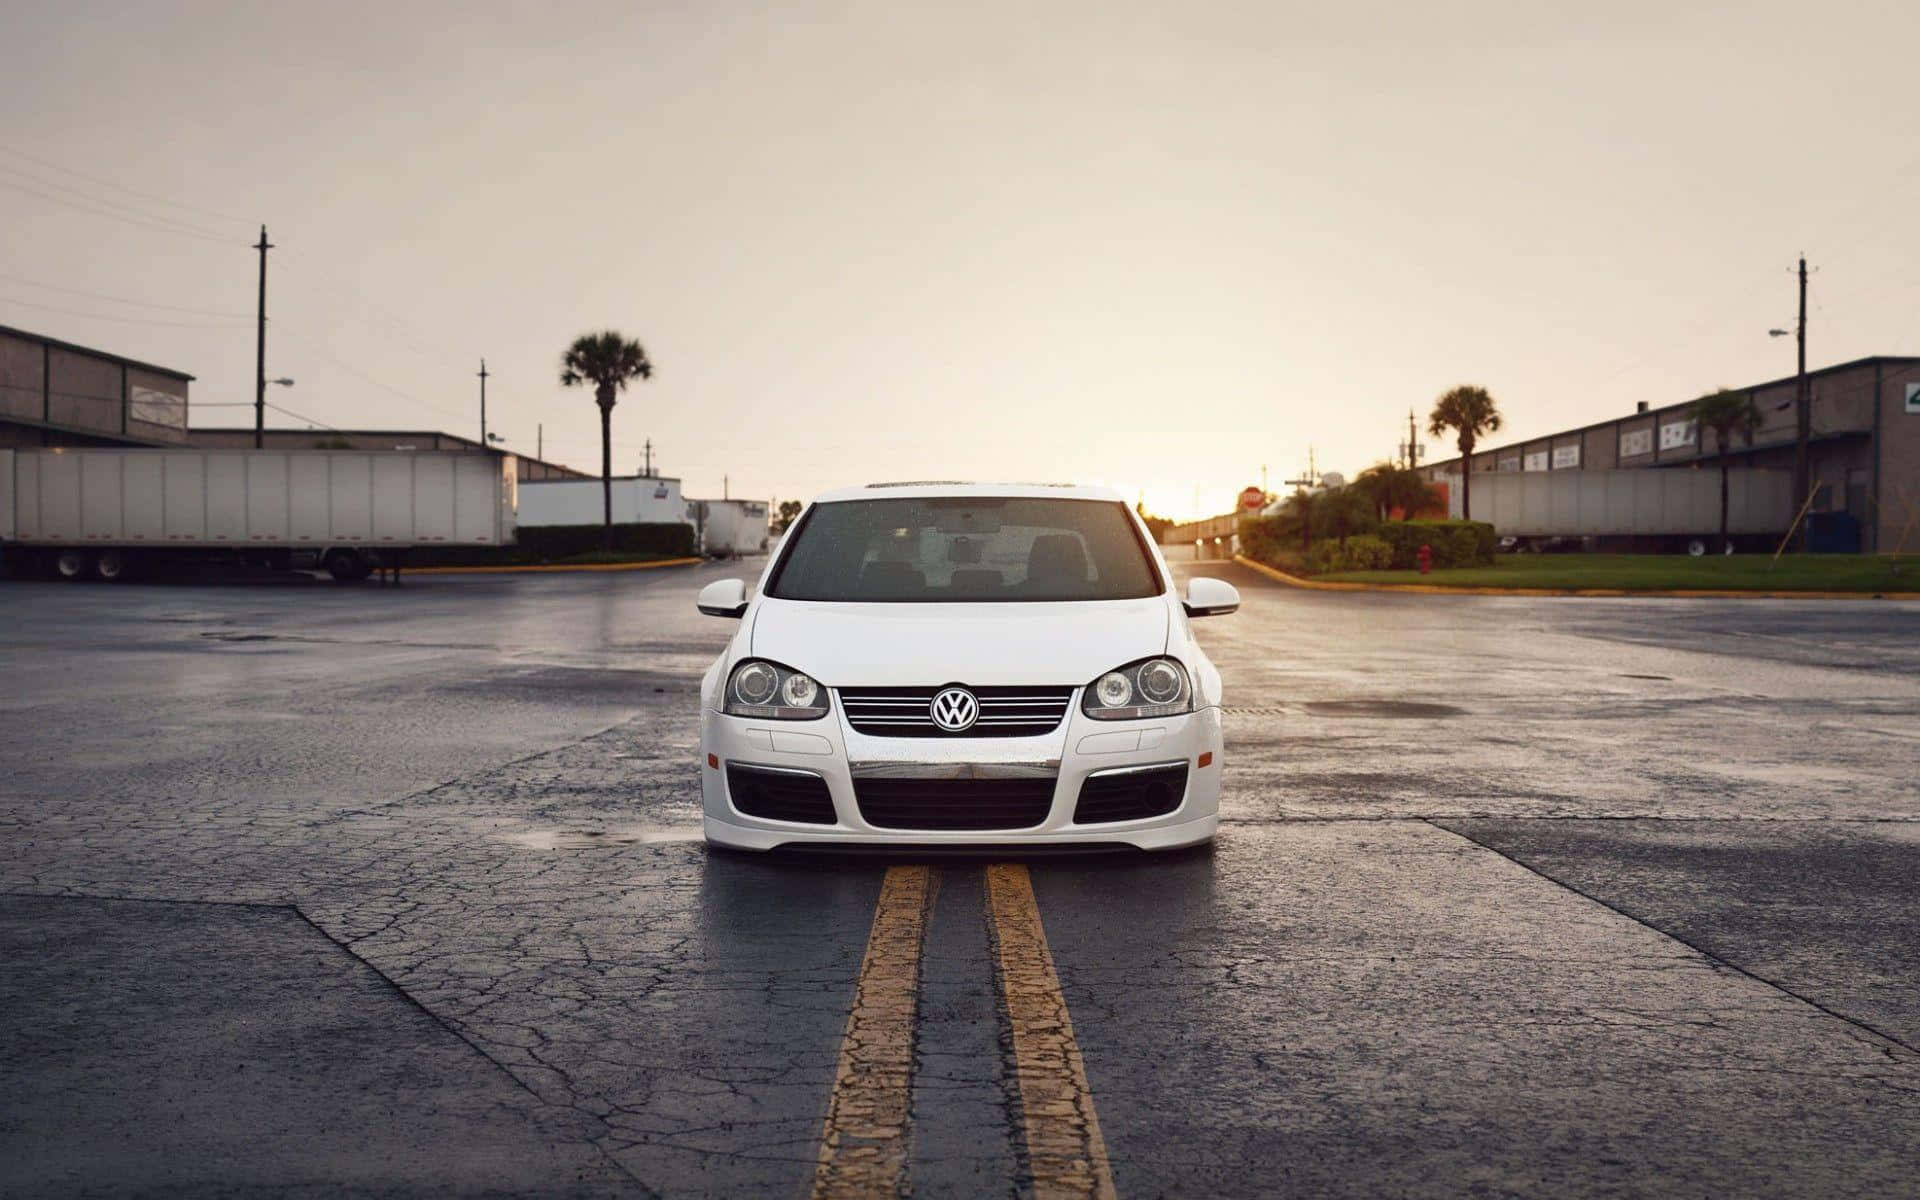 Caption: Sleek Volkswagen Golf In Urban Environment Wallpaper